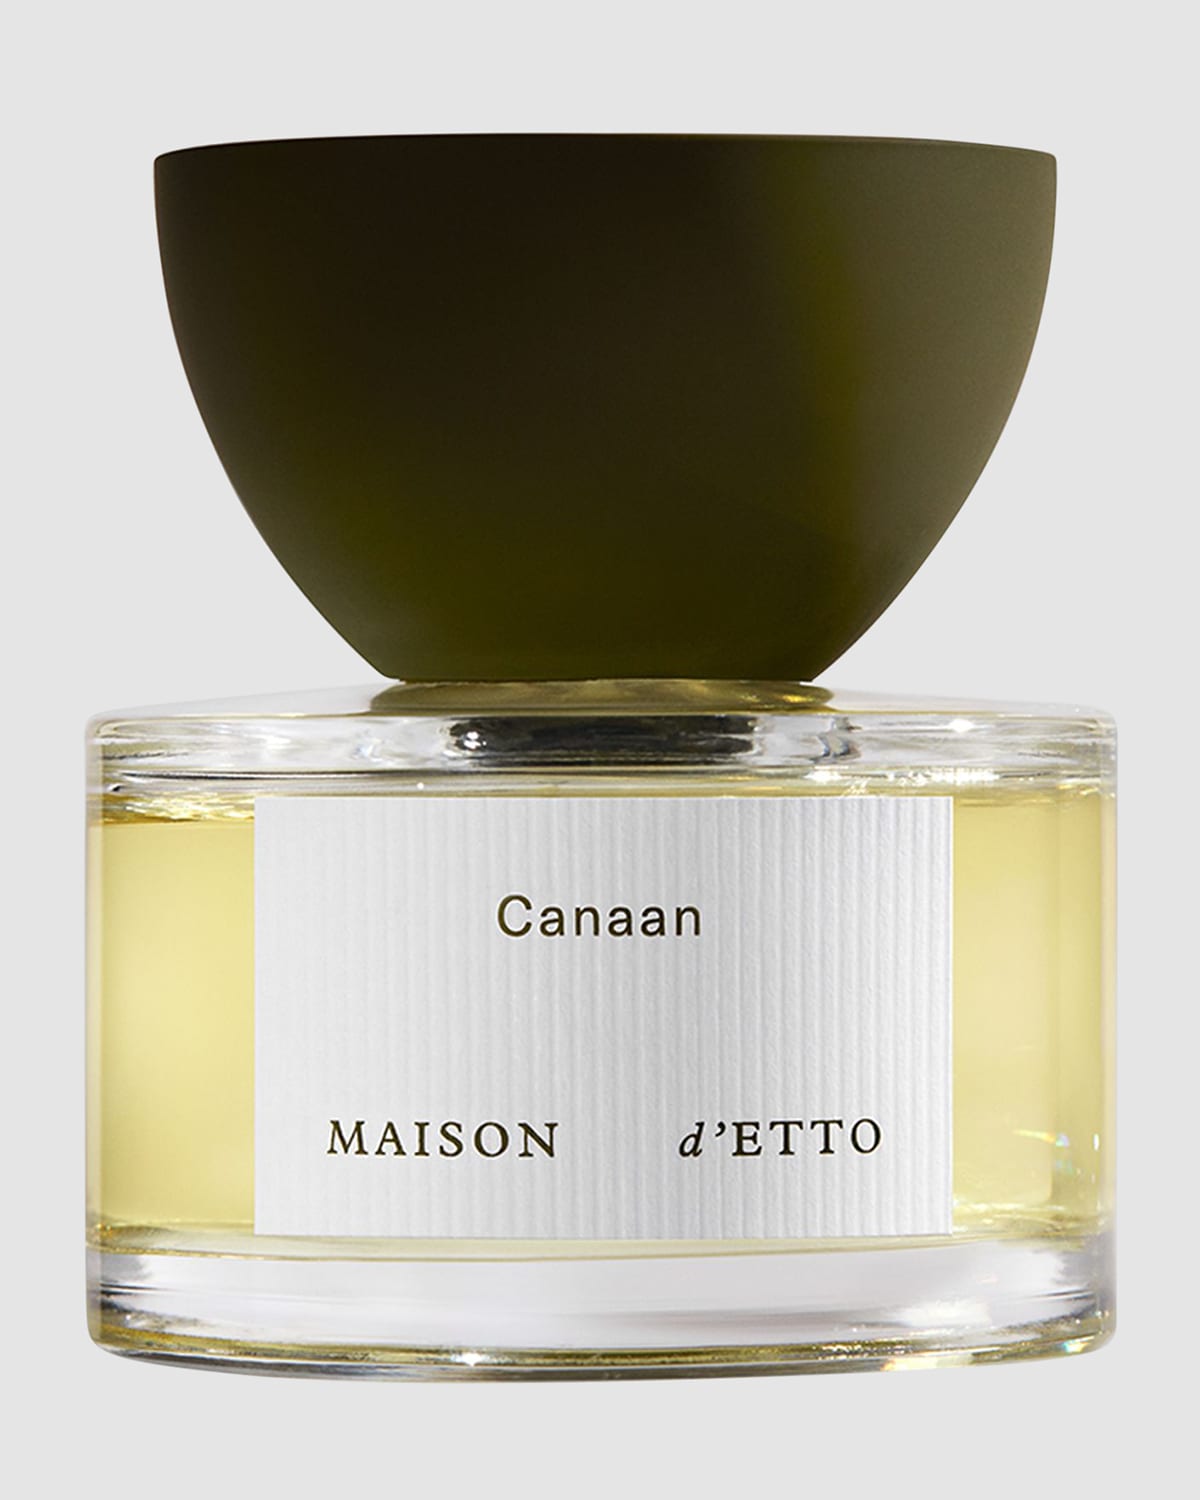 Canaan Eau de Parfum, 2 oz./ 60 mL